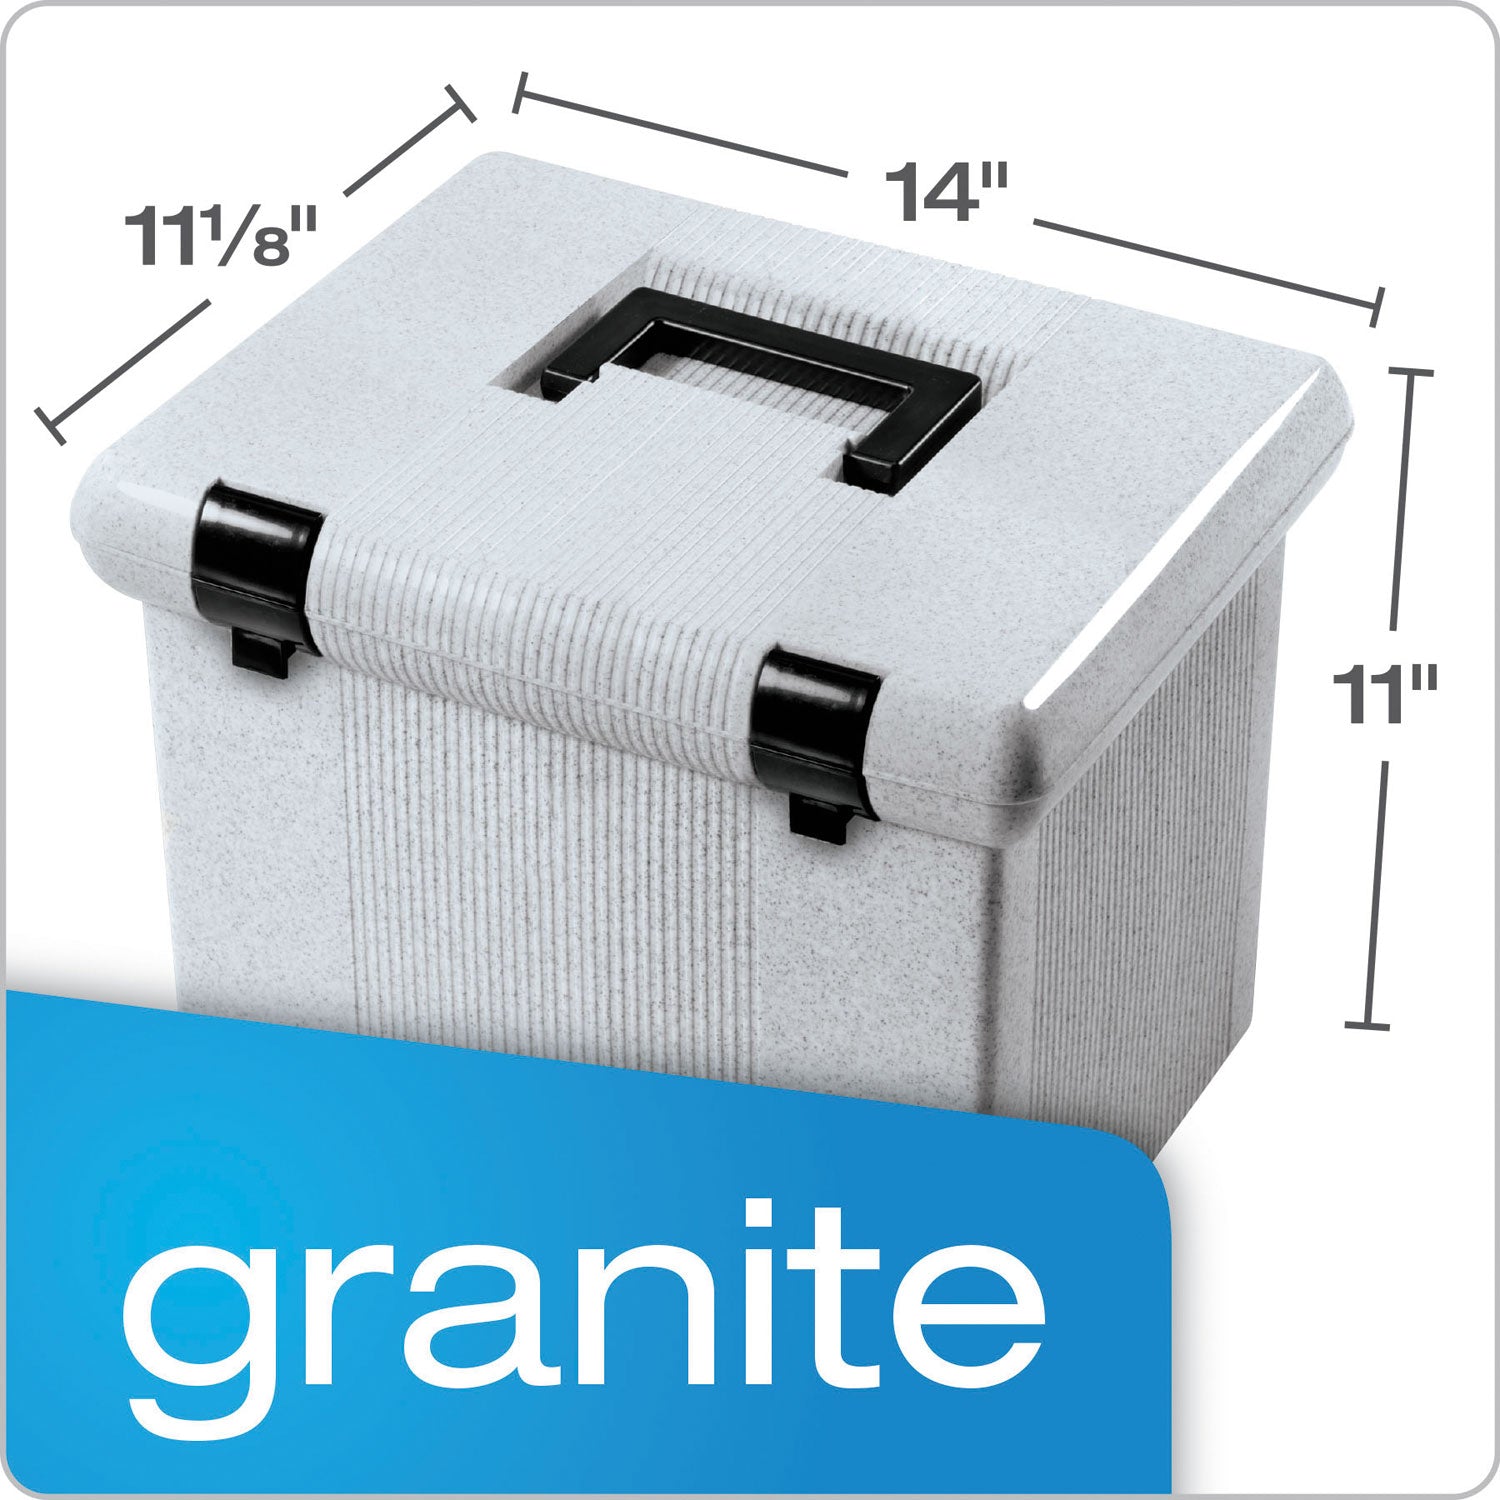 Portable File Boxes, Letter Files, 13.88" x 14" x 11.13", Granite - 